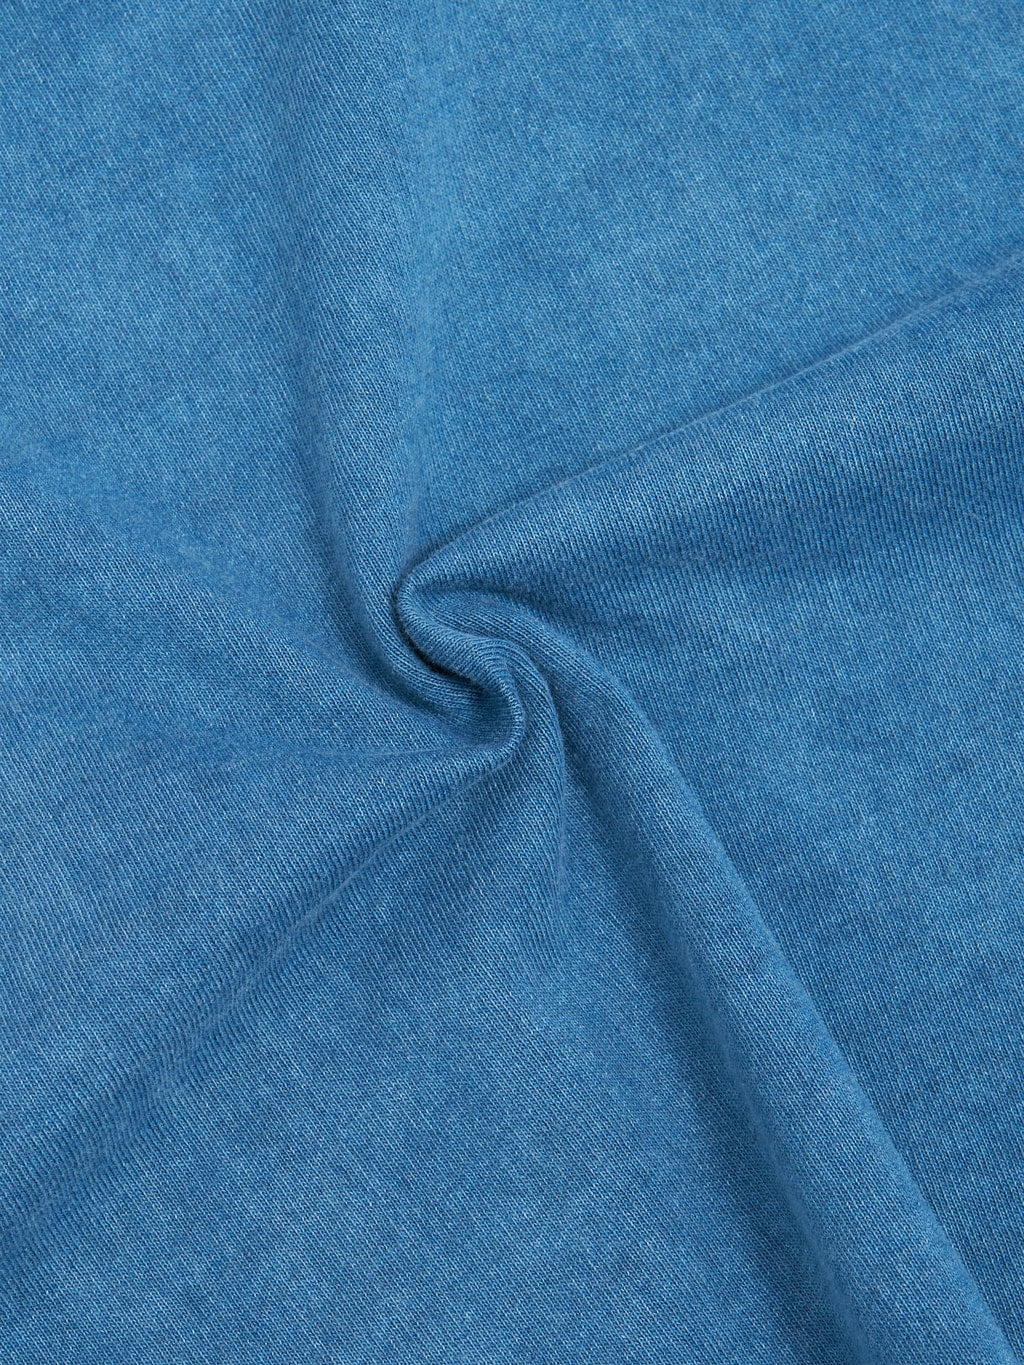 jackman lead off tshirt fade blue  texture